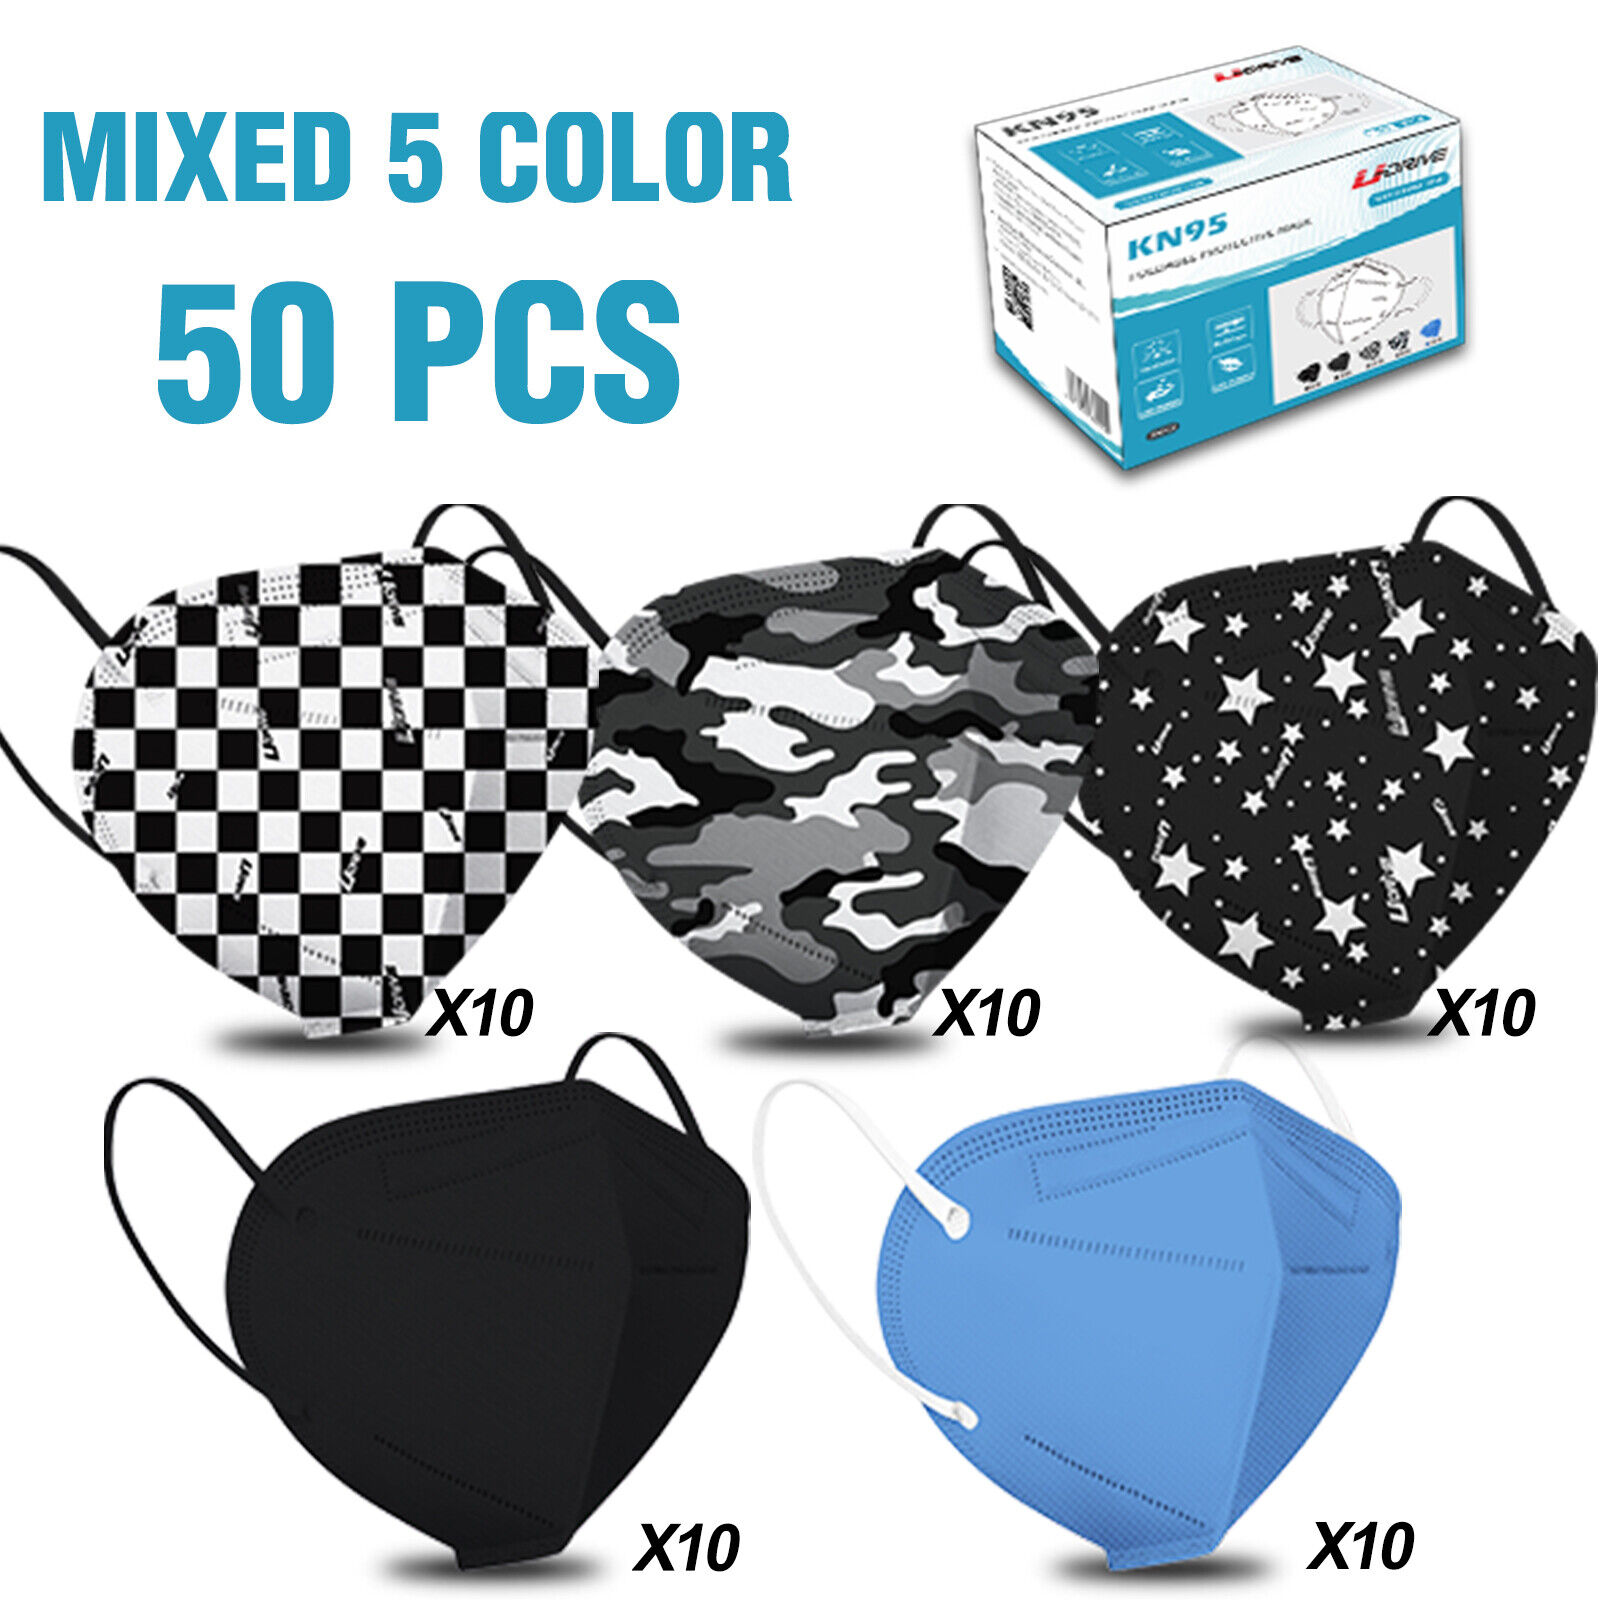 50/100 PCS KN95 Face Masks Protective 5-Layer Disposable Respirator US Seller